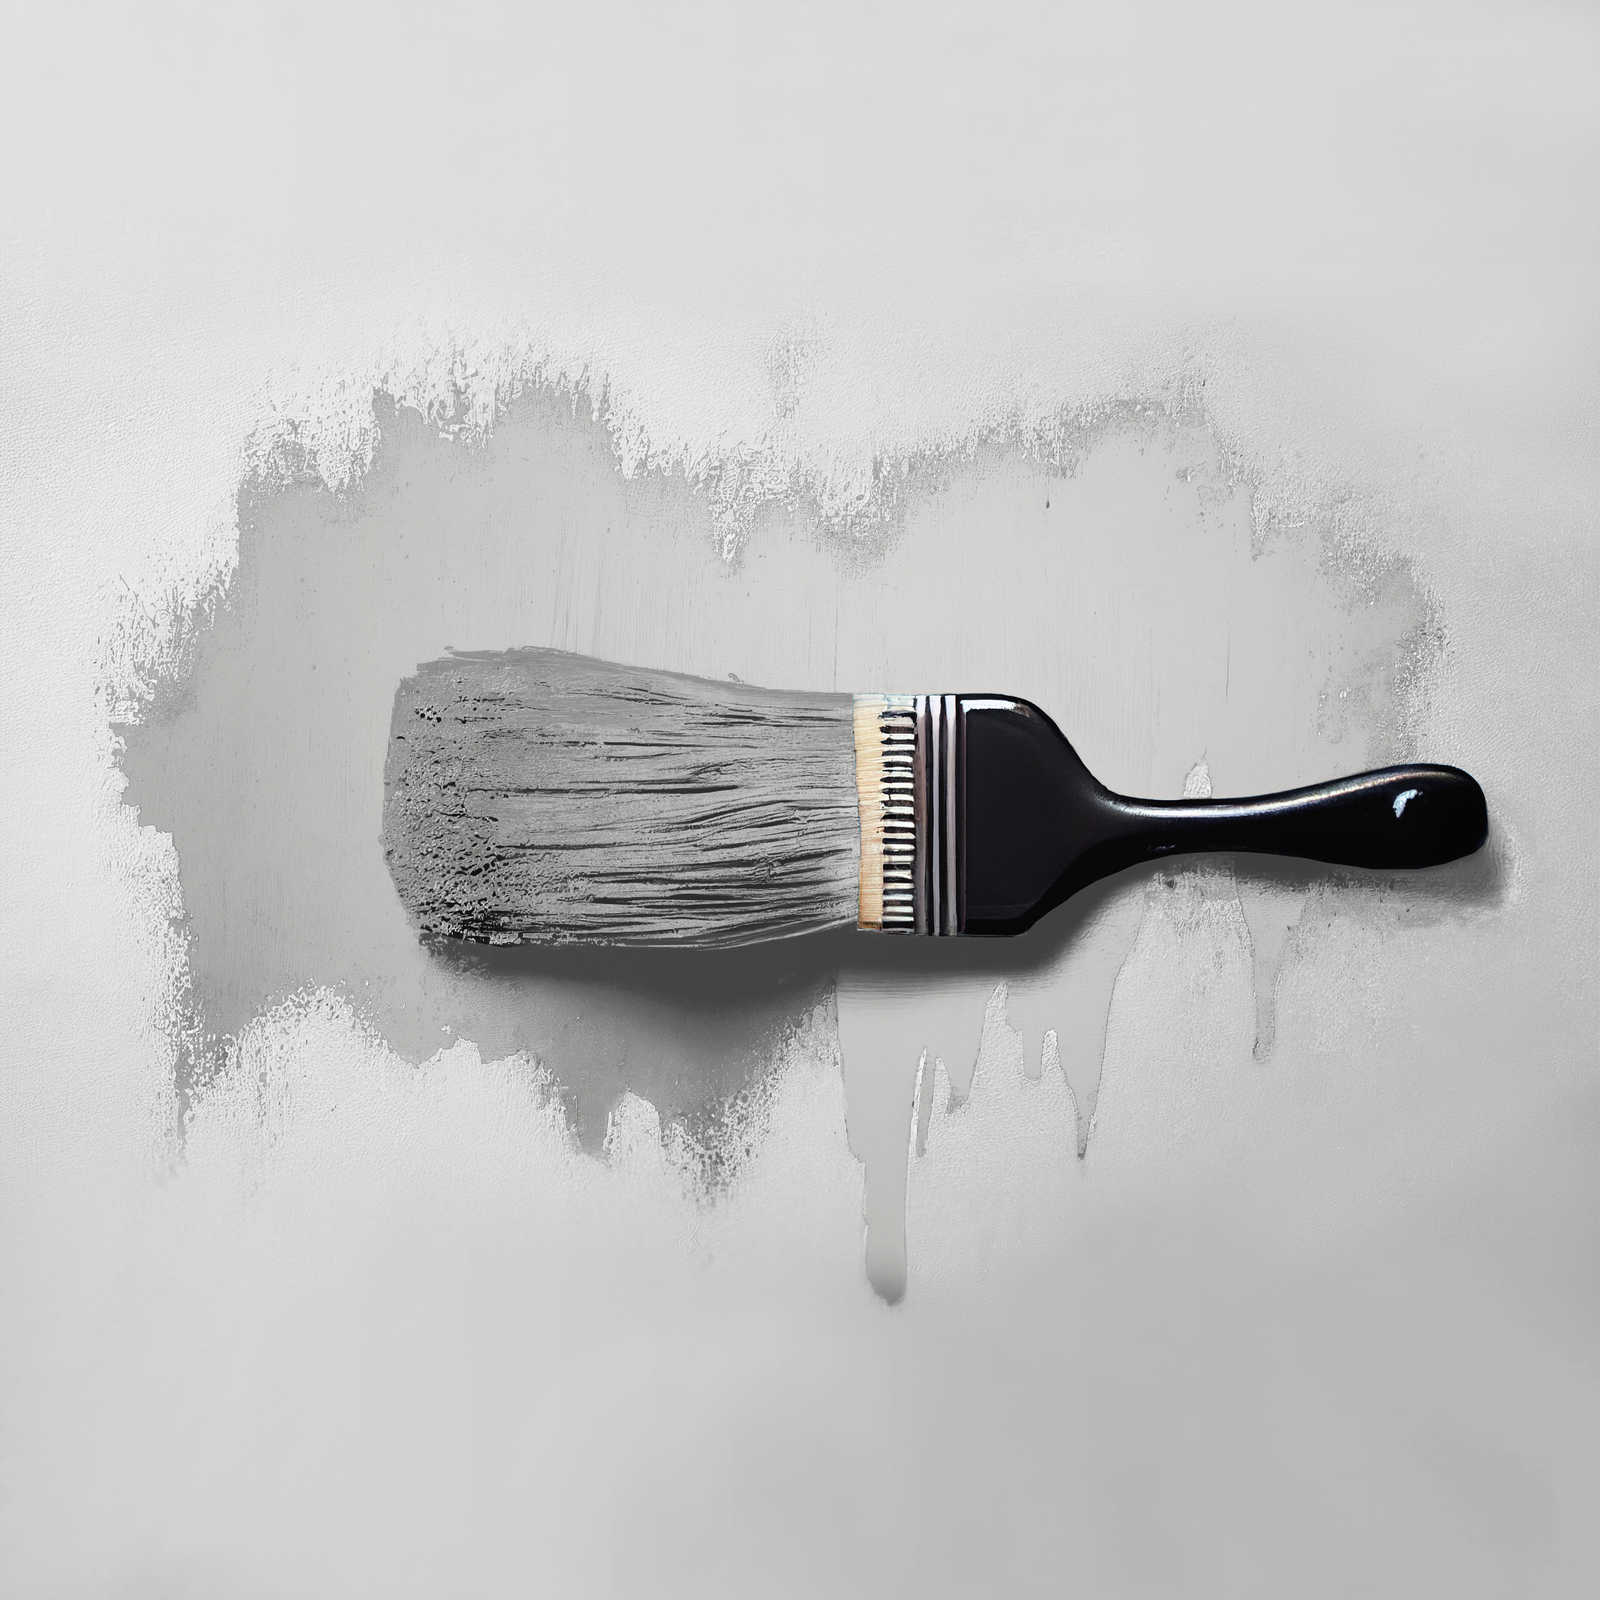             Wall Paint TCK1009 »Sprat Fish« in plain silver grey – 5.0 litre
        